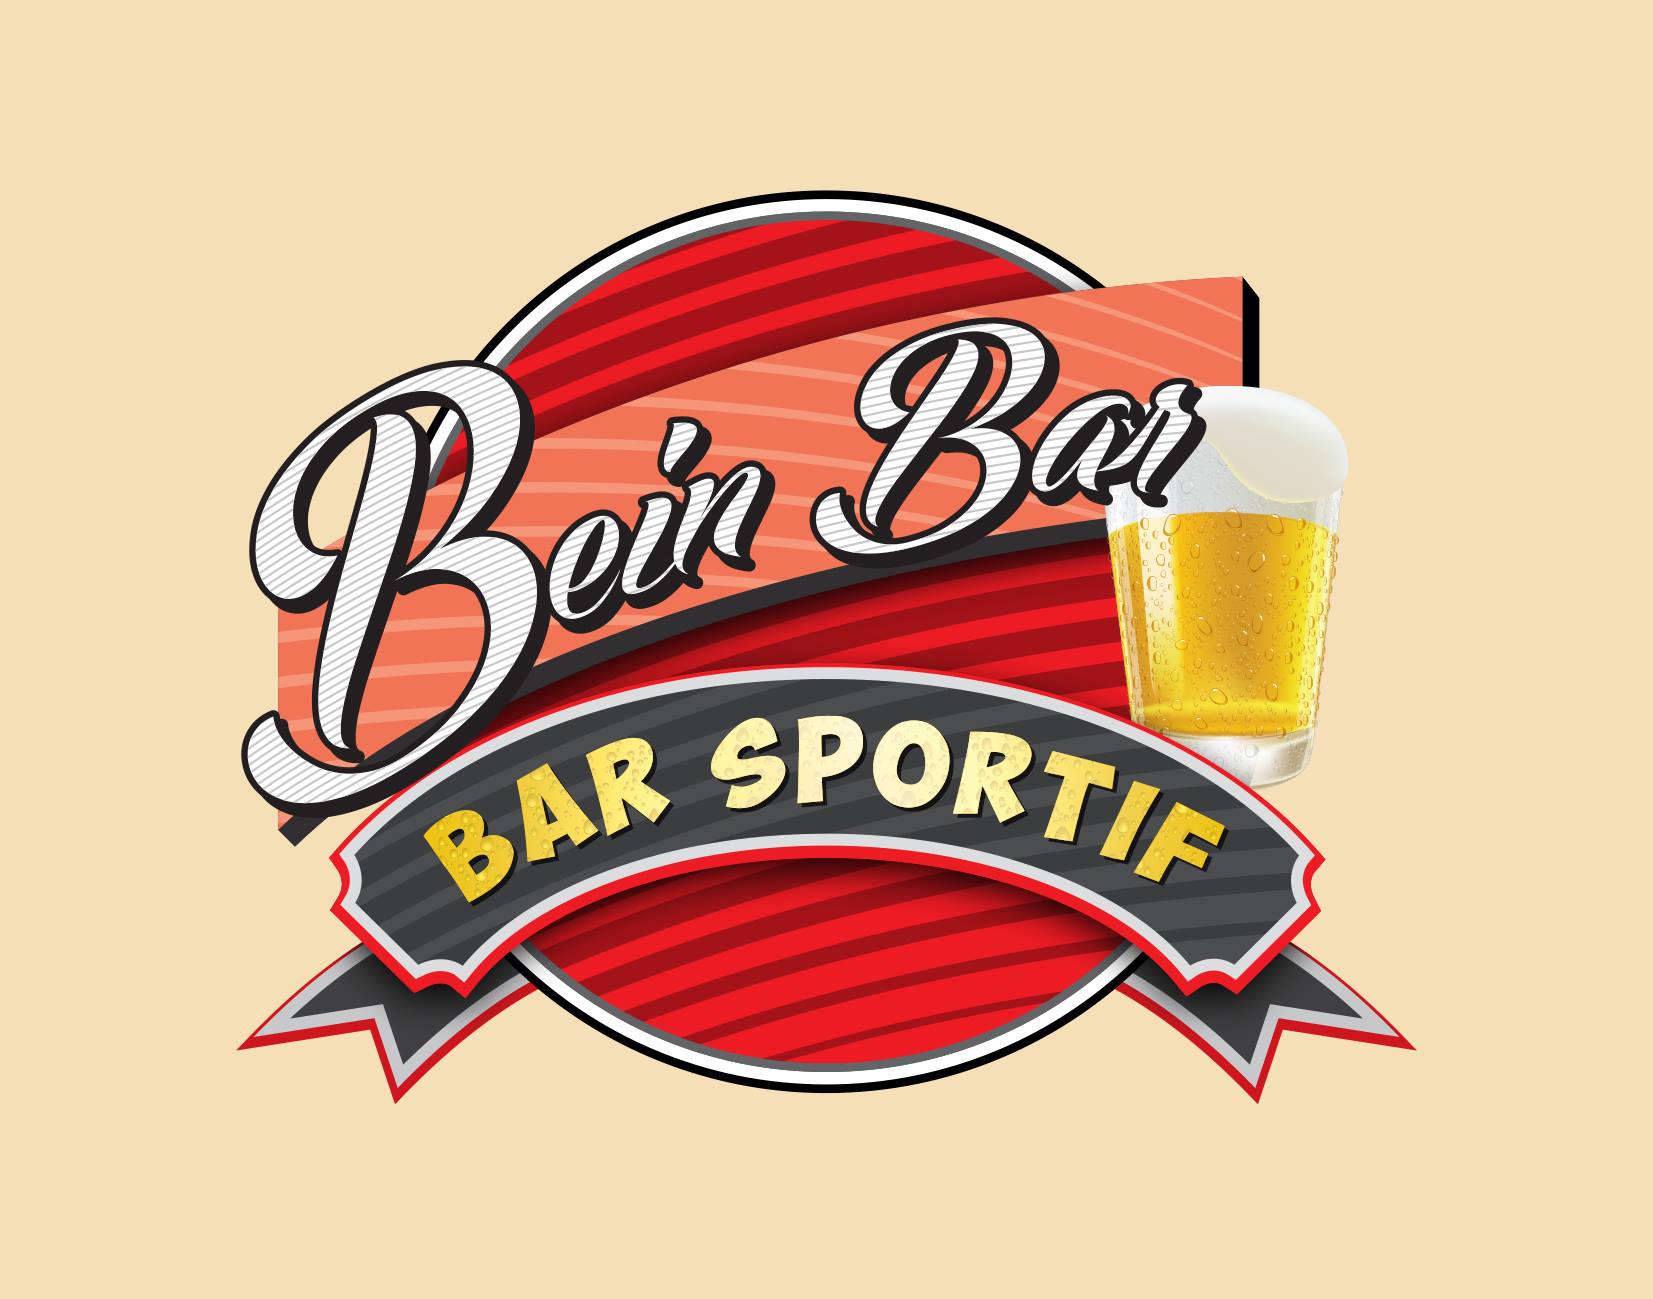 Sponsor - Bein Bar